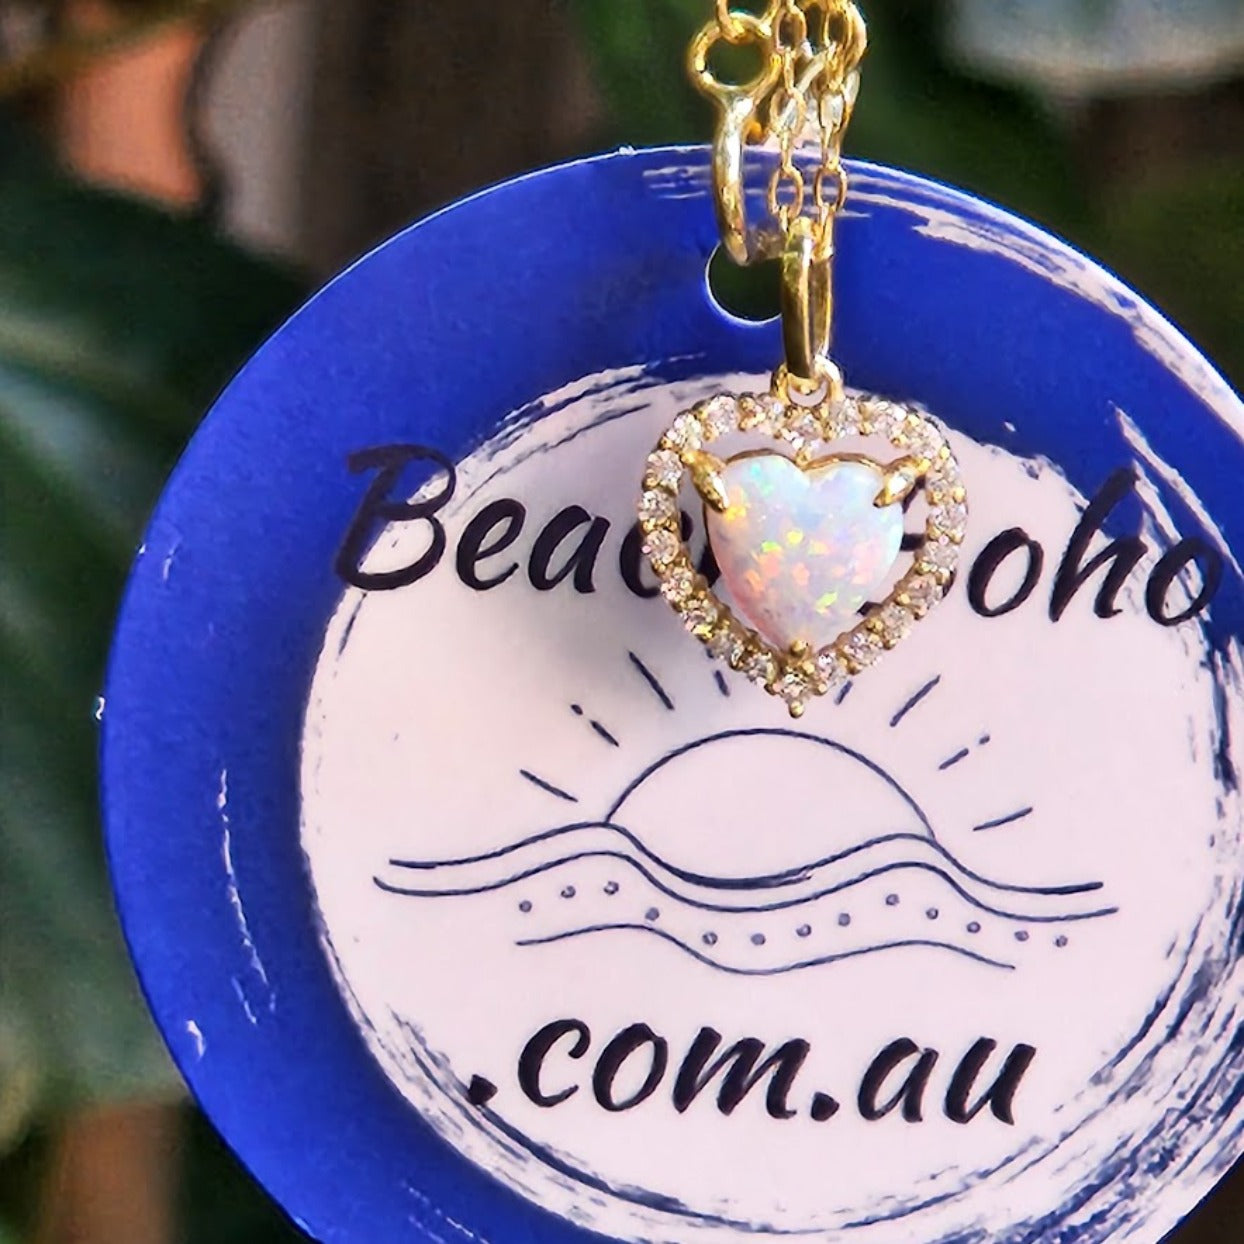 PURE OF HEART - PETITE VERMEIL STUD OPAL NECKLACE - Premium Necklace from www.beachboho,com.au - Just $75! Shop now at www.beachboho.com.au